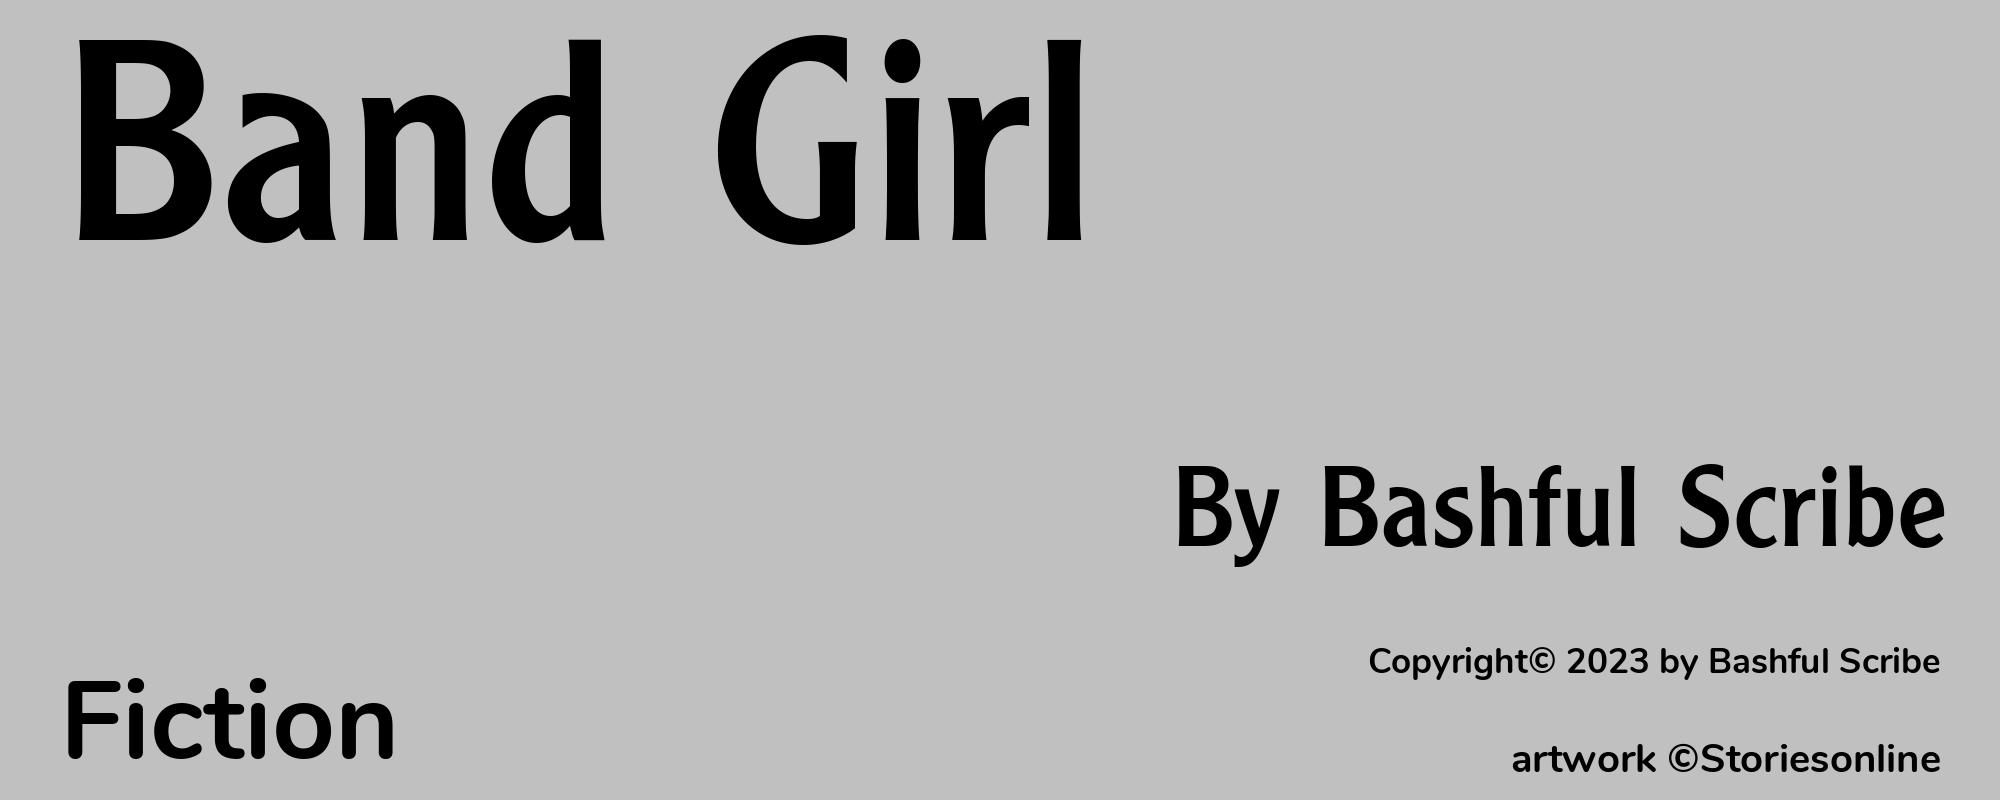 Band Girl - Cover